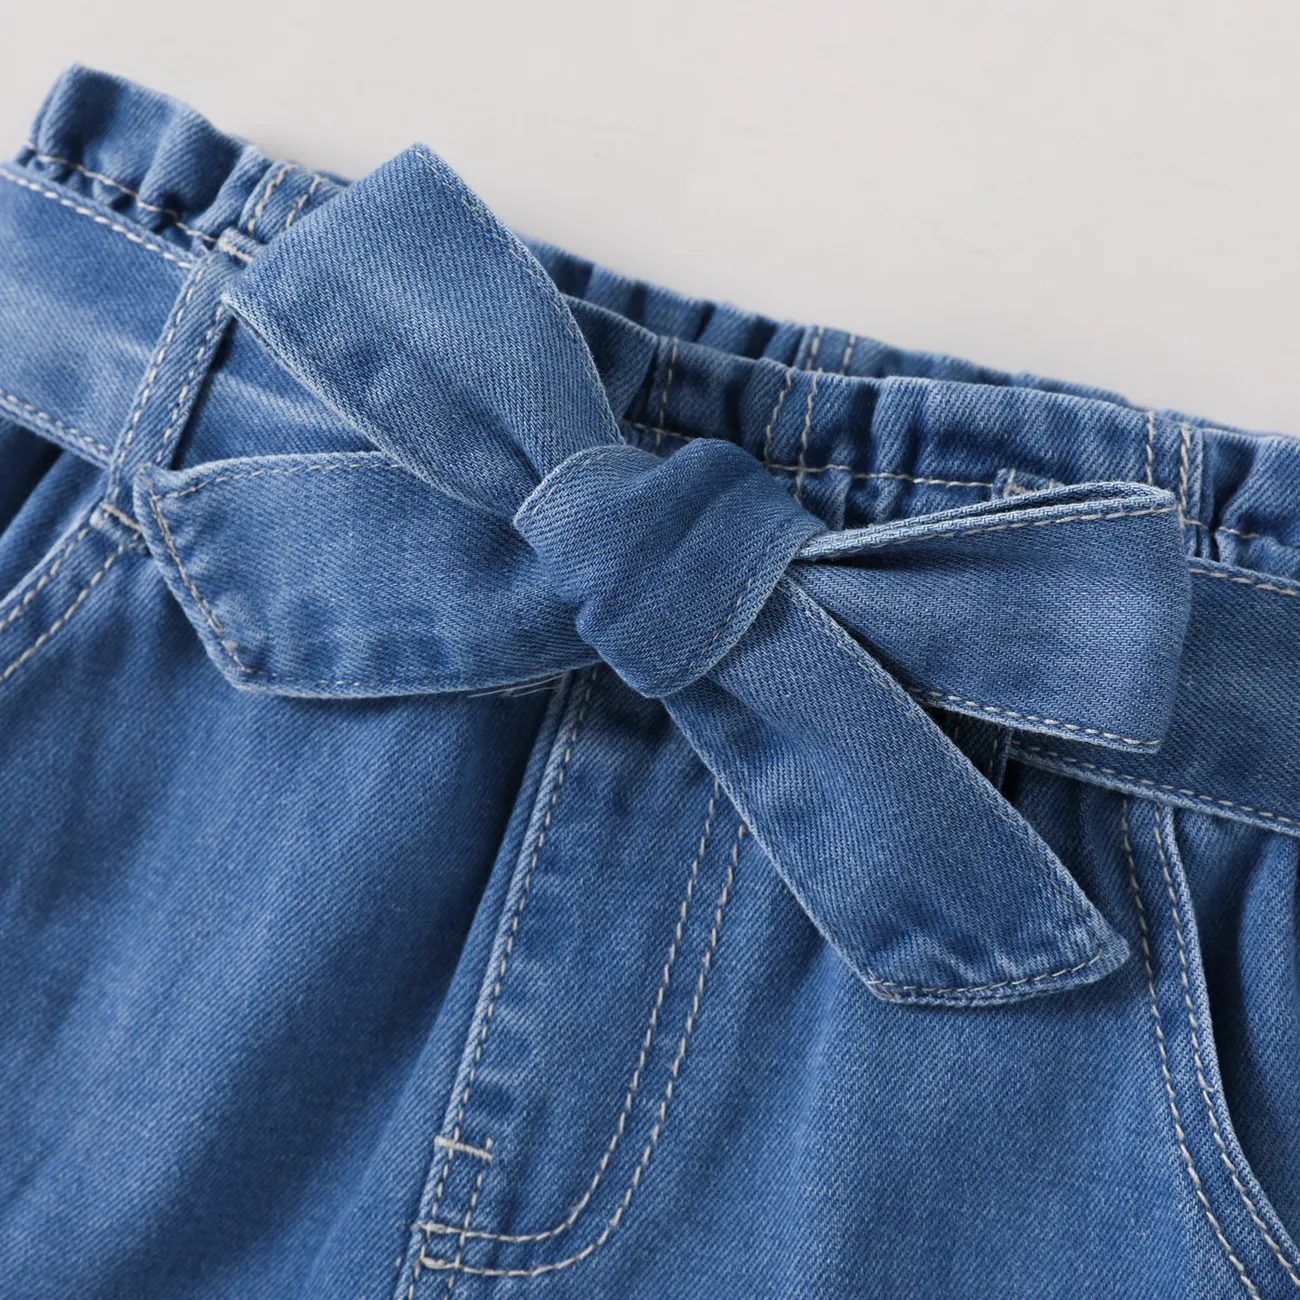 Baby Girl 95%% Cotton Rainbow Graphic Belted Denim Shorts Light Blue big image 1